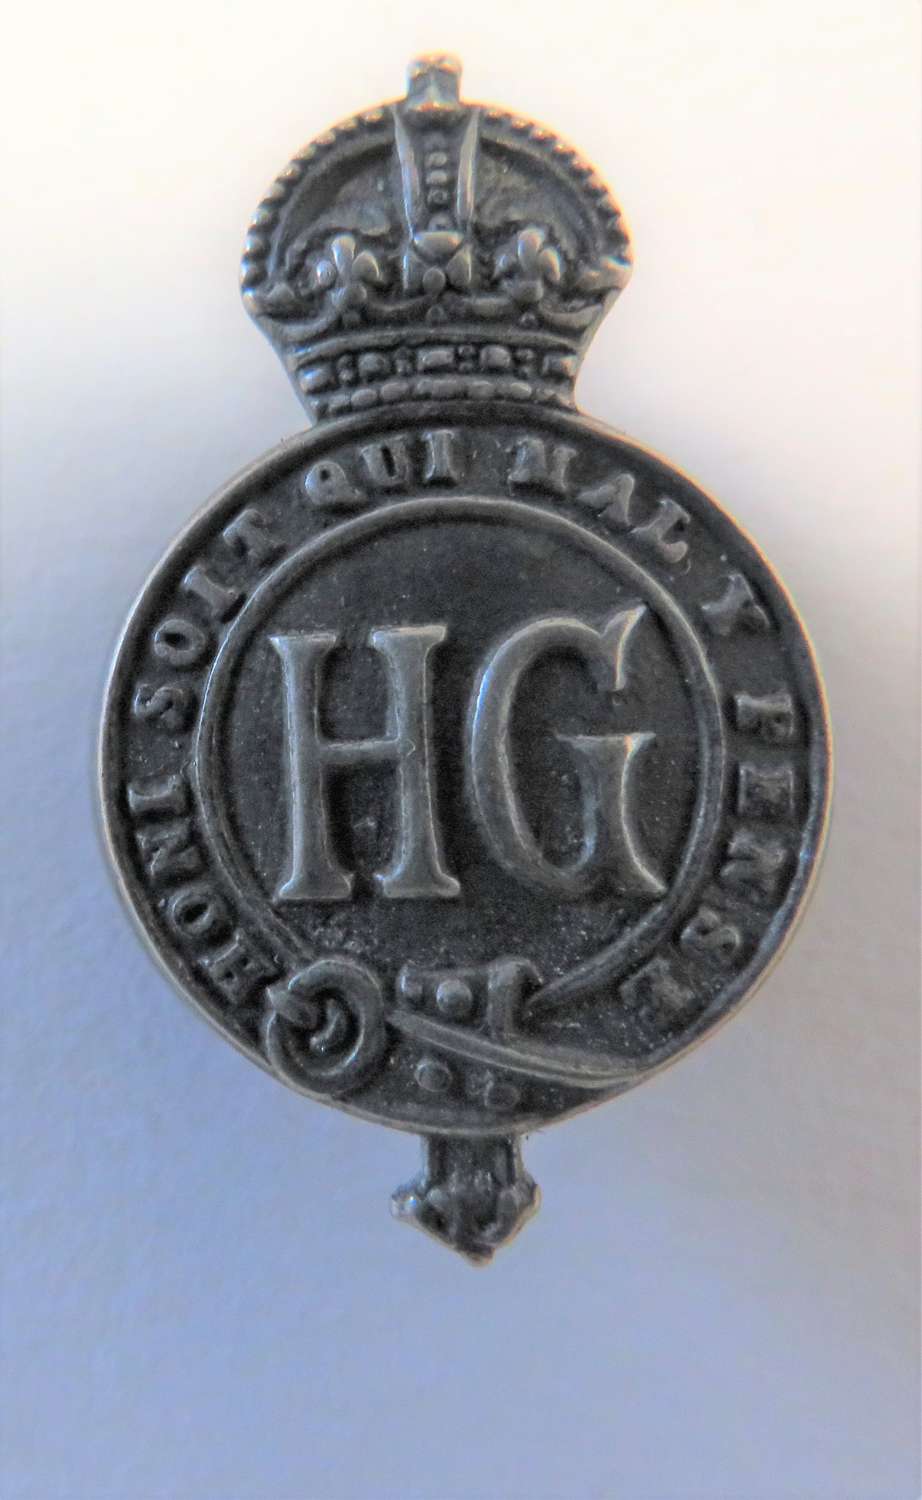 Home Guard Small Size Lapel Badge